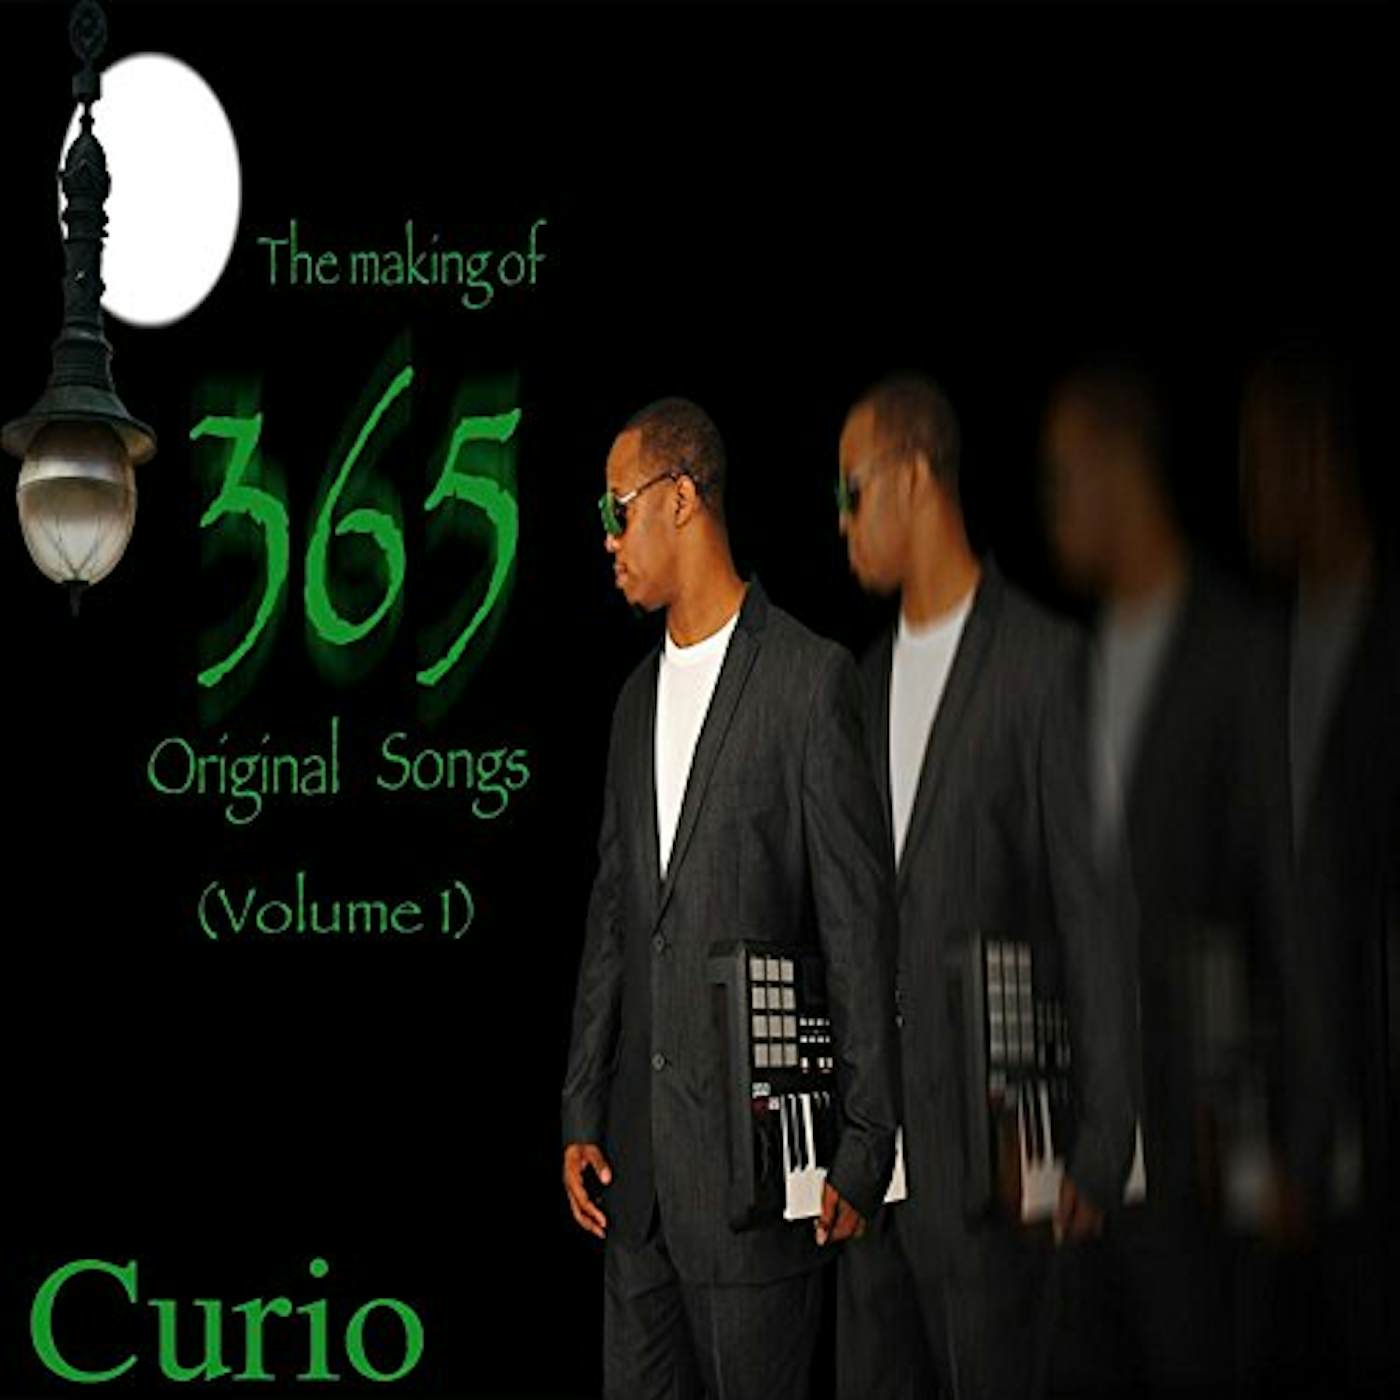 Curio MAKING OF 365 ORIGINAL SONGS 1 CD